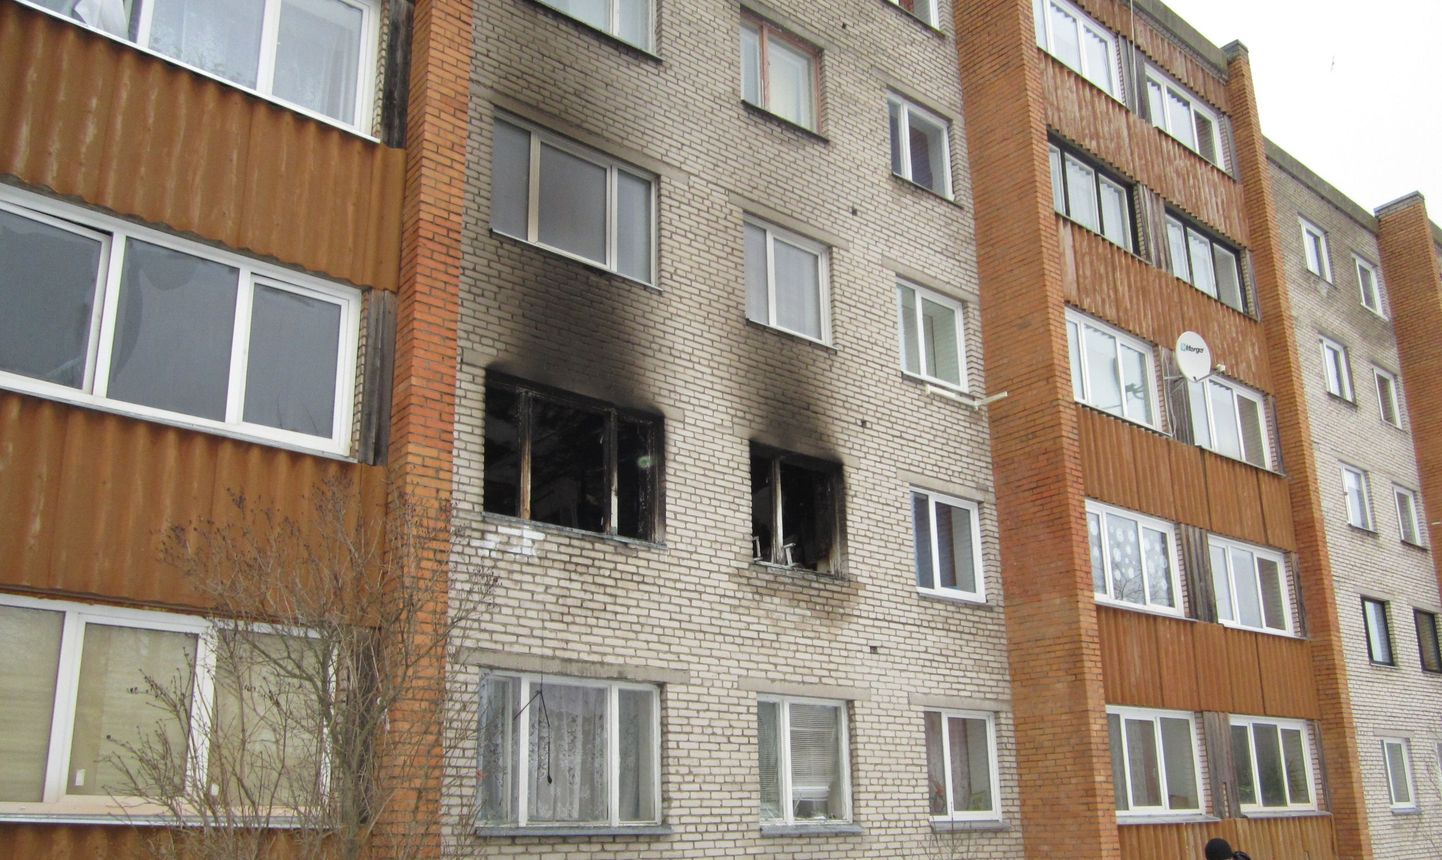 Sillamäel Gagarini tänaval asuvas elumajas toimus plahvatus.